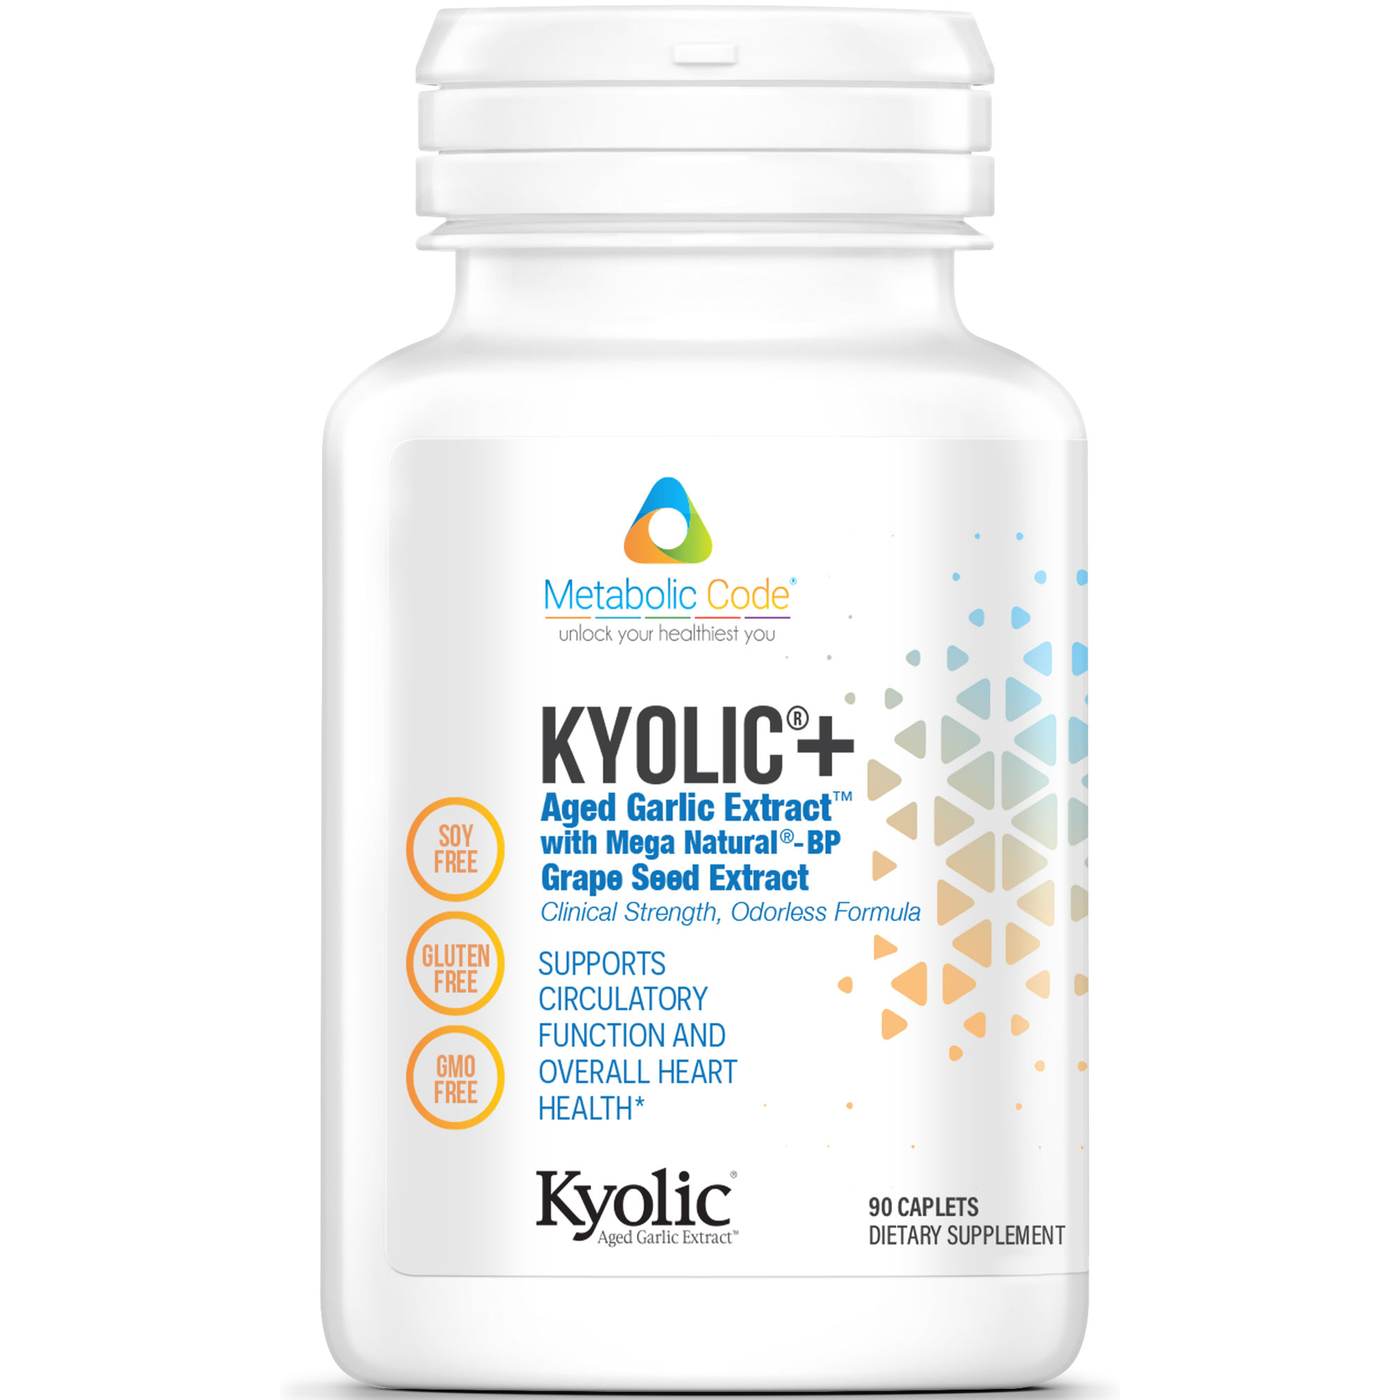 Metabolic Code Kyolic+ s Curated Wellness